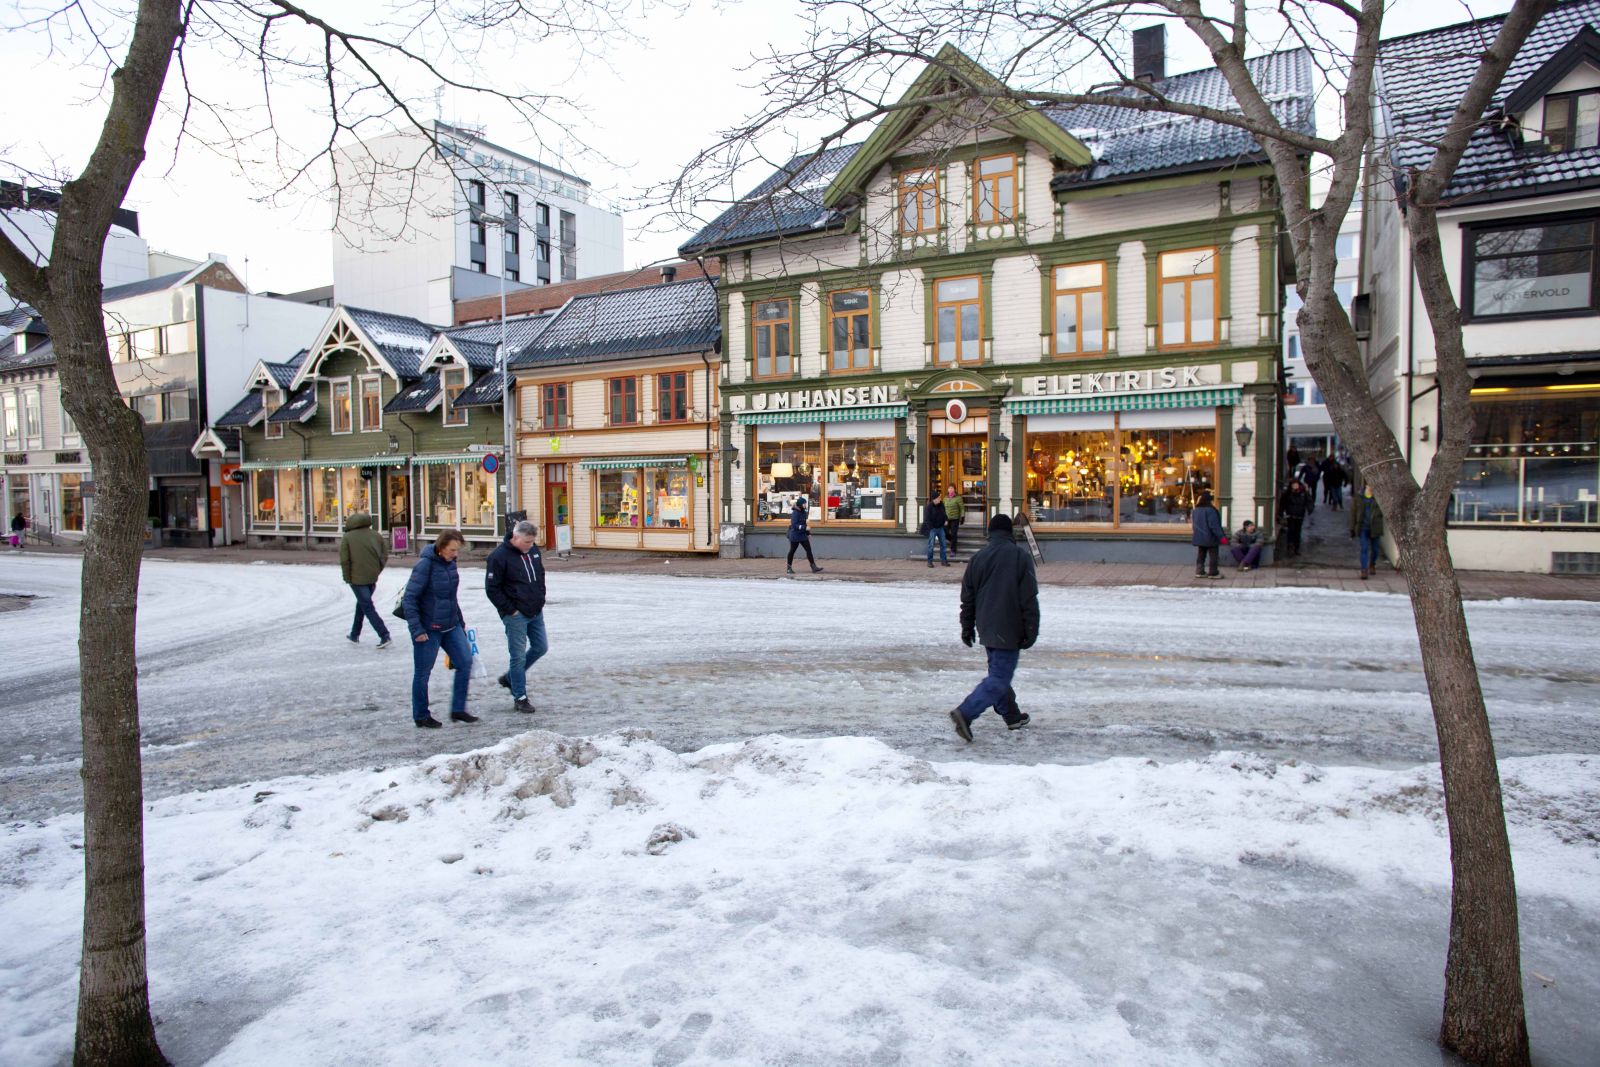 Winter roads in Scandinavia